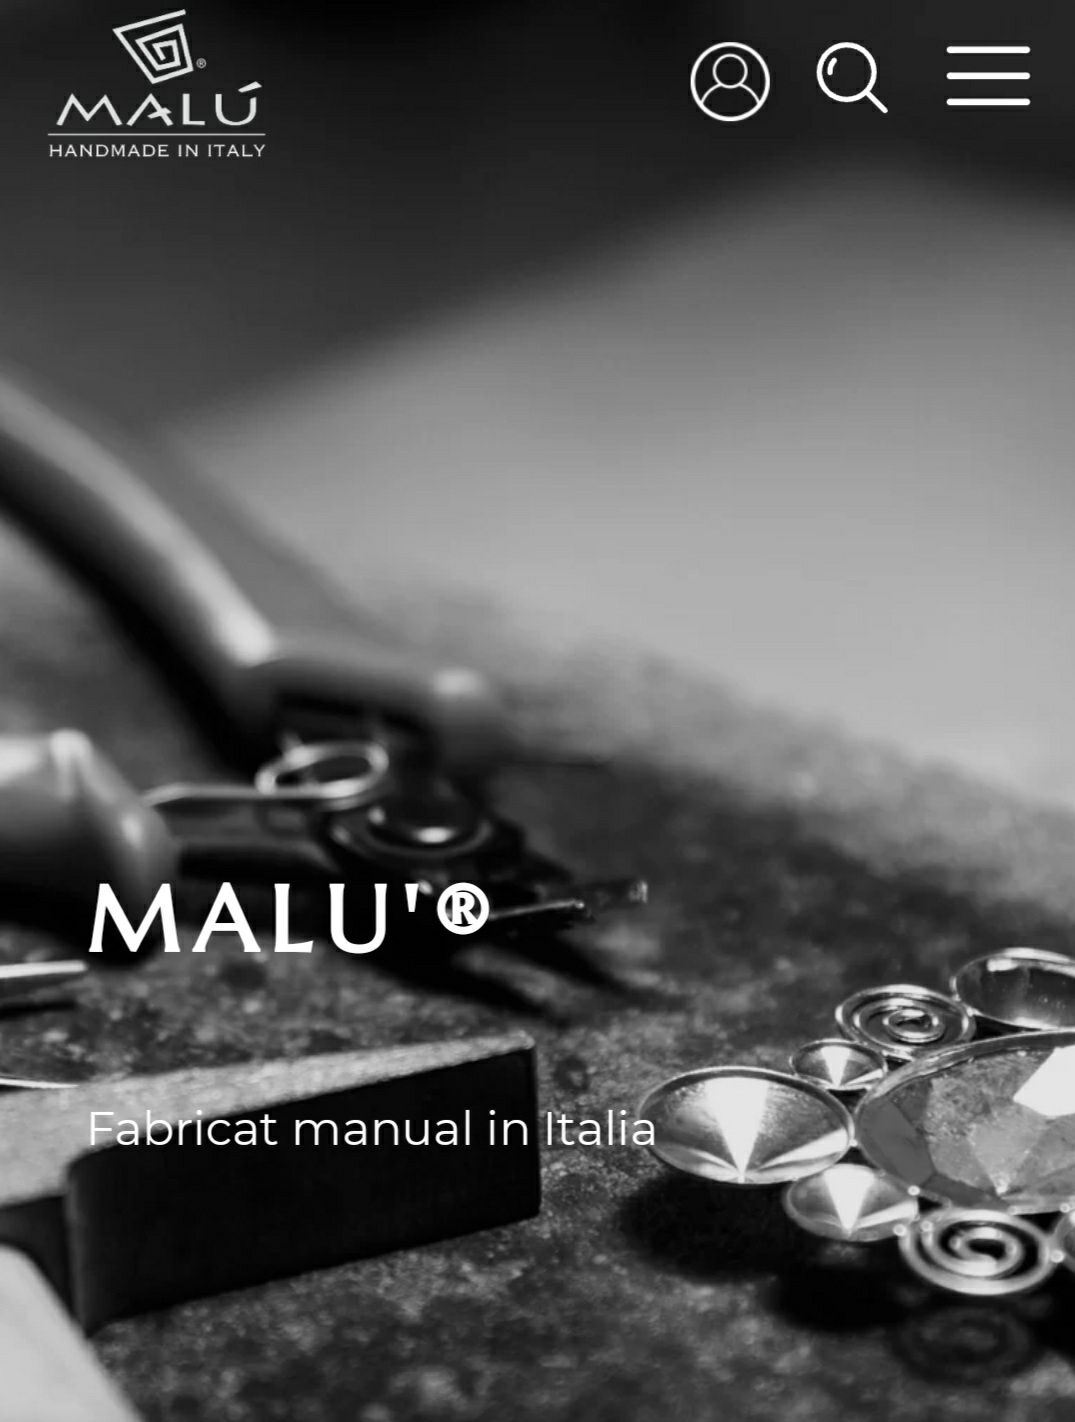 Brătară MALU Handmade în Italy inox și cristale Swarovski